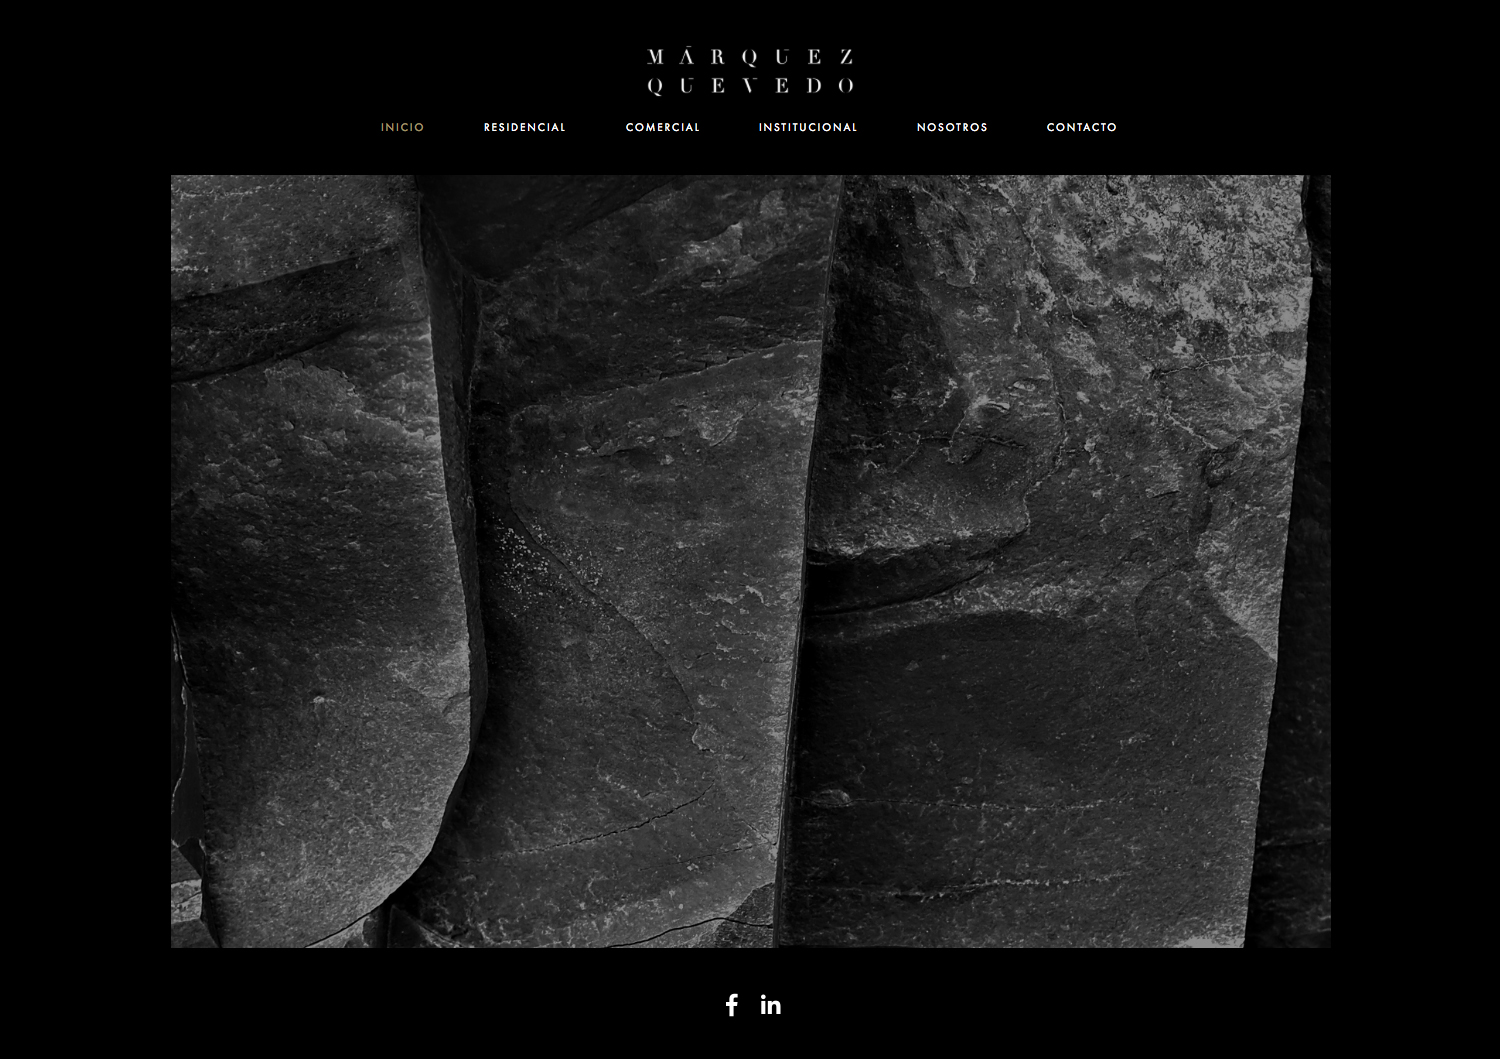 Brand identity and website for Mexican architectural studio Marquez Quevedo by La Tortillería